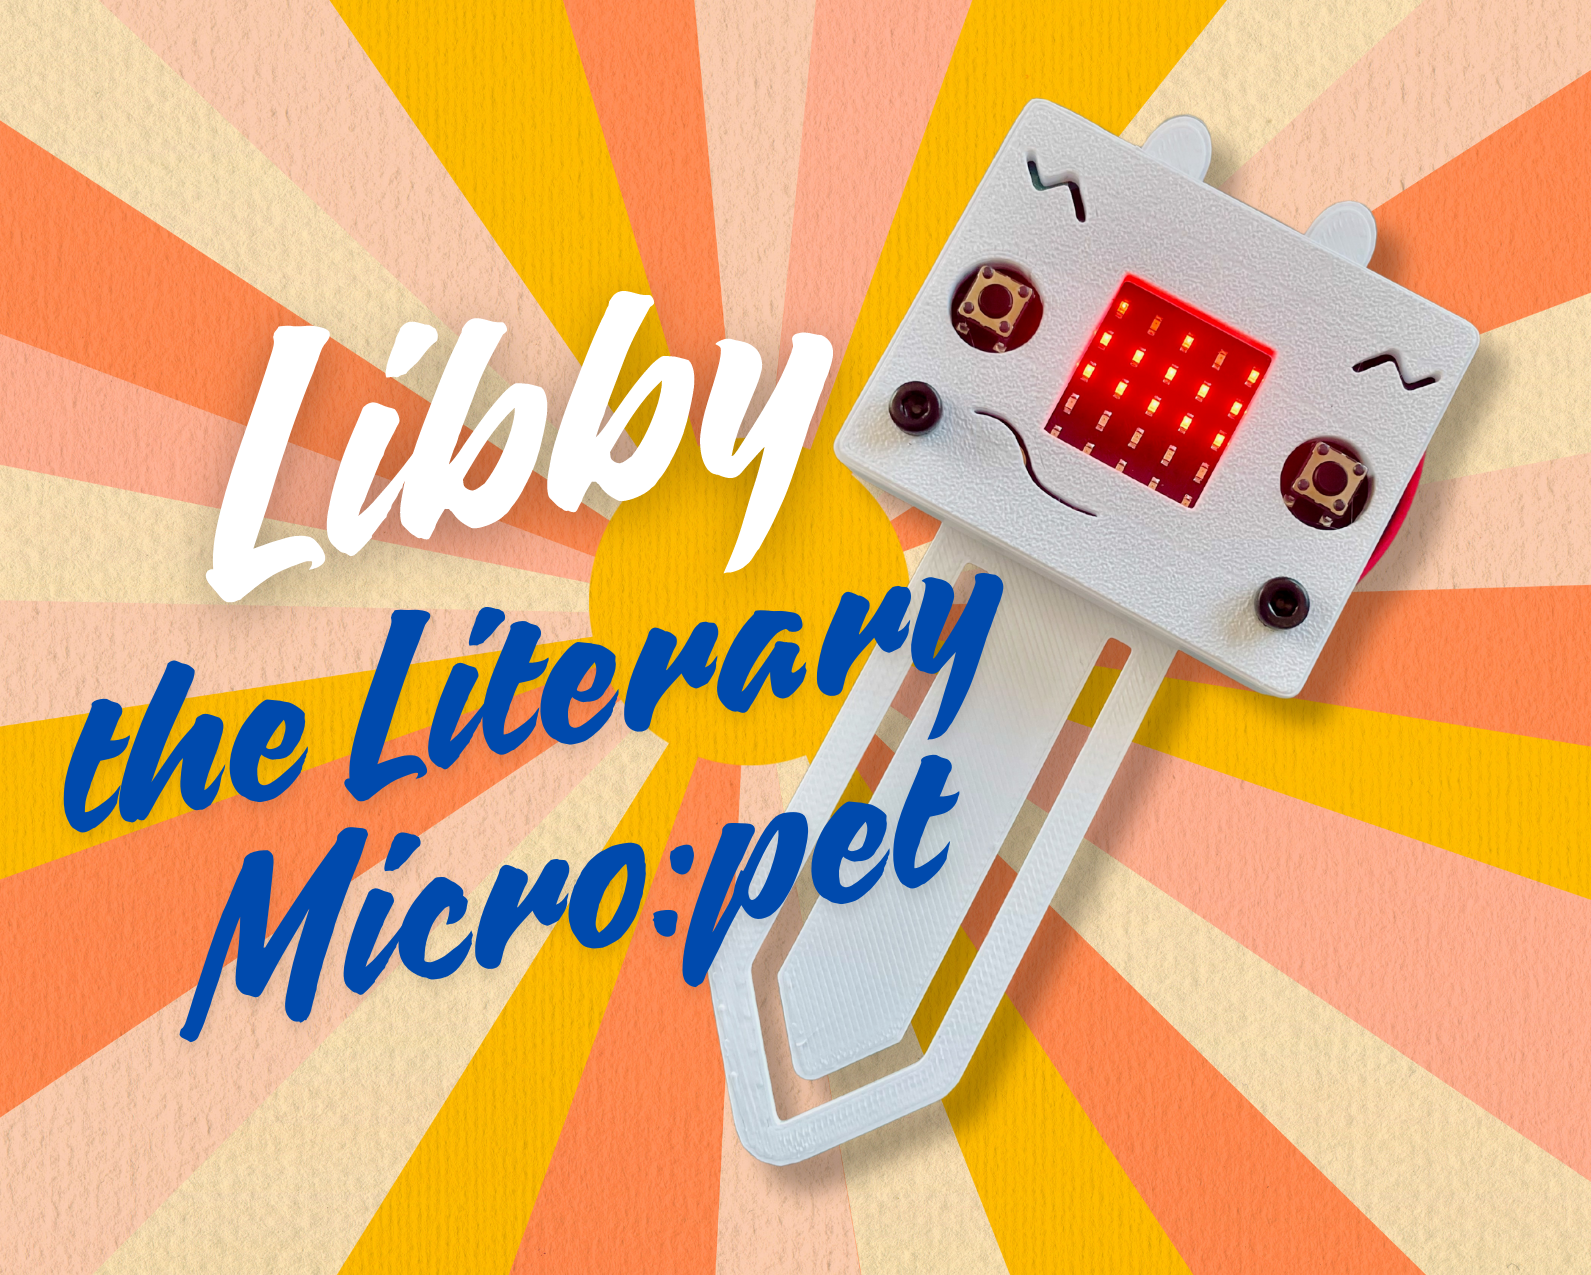 "Libby" the Literary Micro:pet